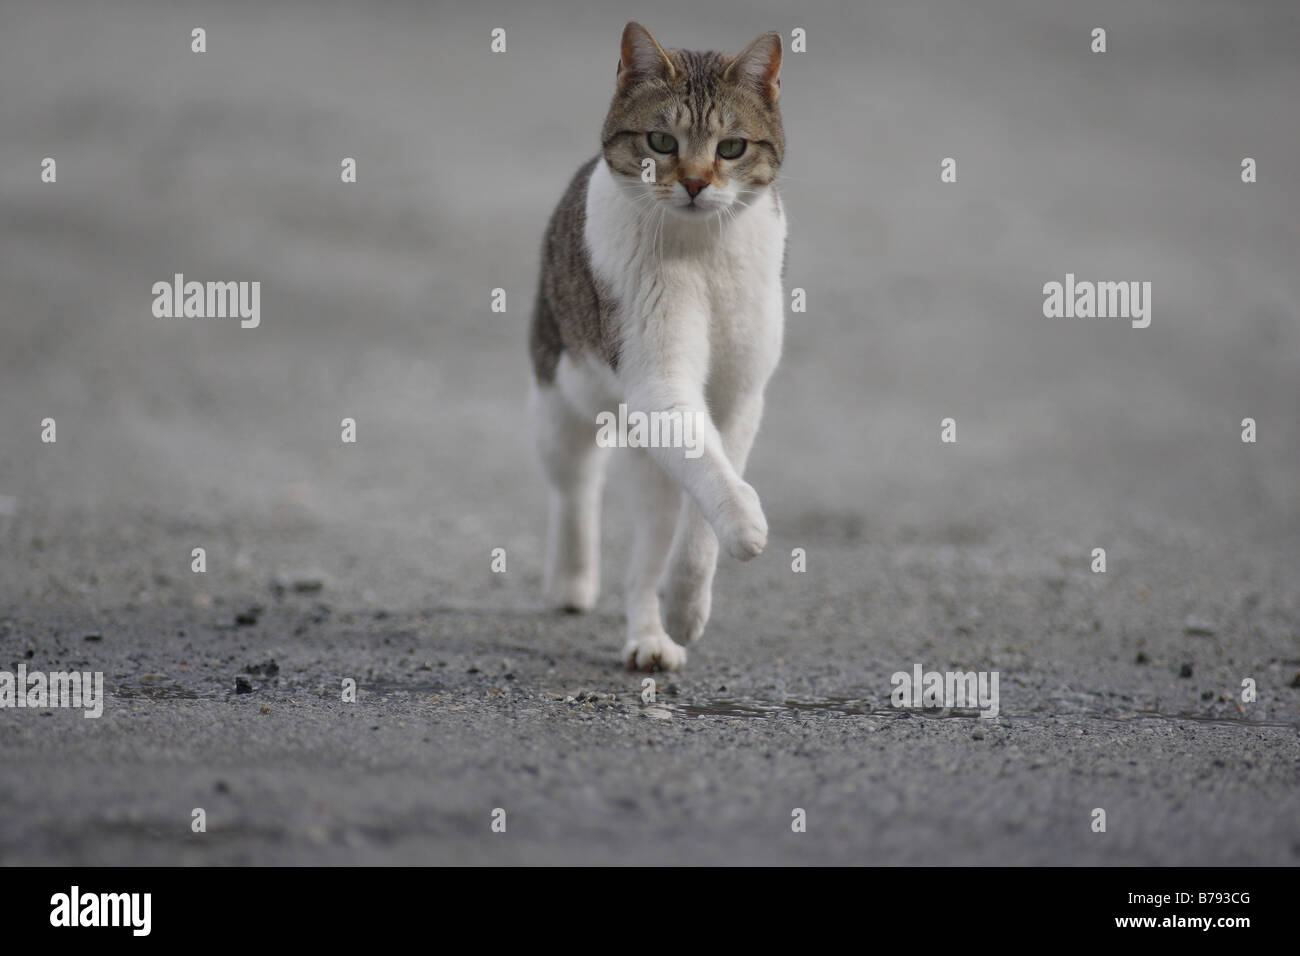 european domestic cat running Stock Photo